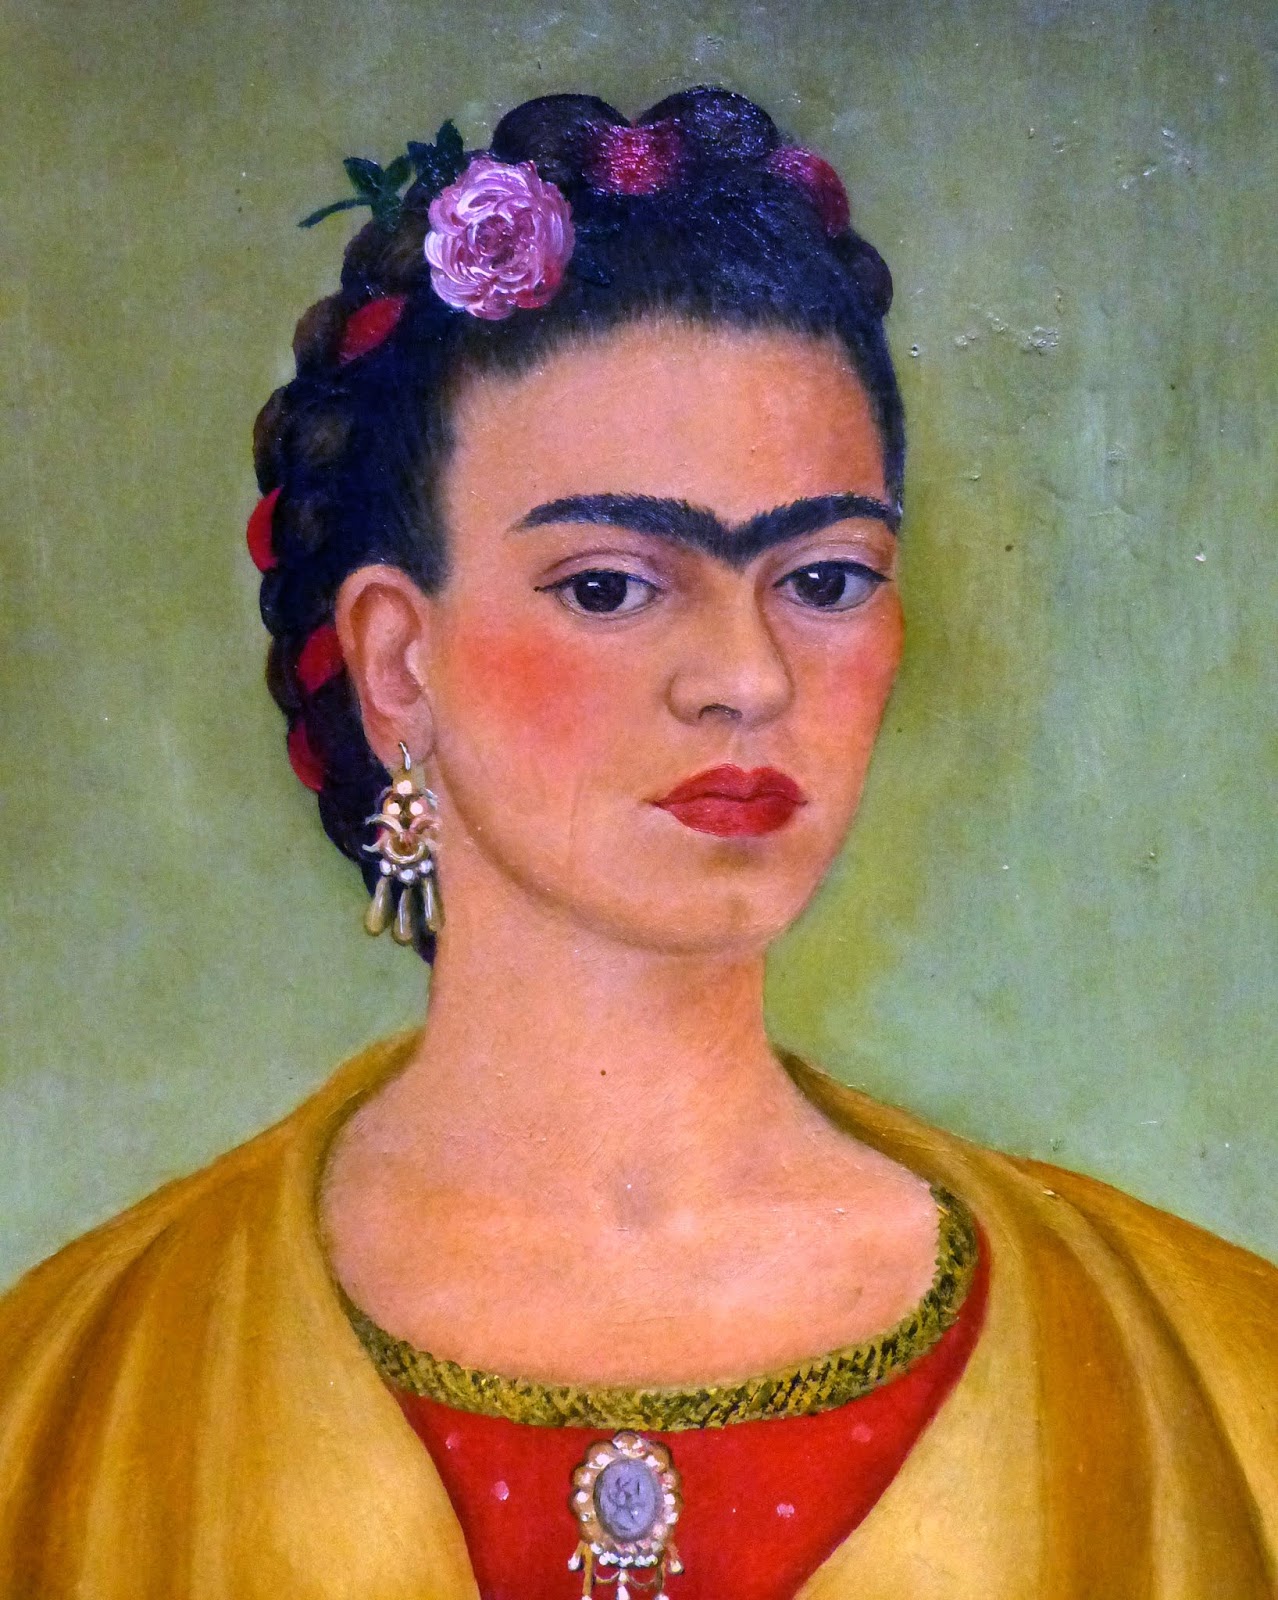 brief biography of frida kahlo